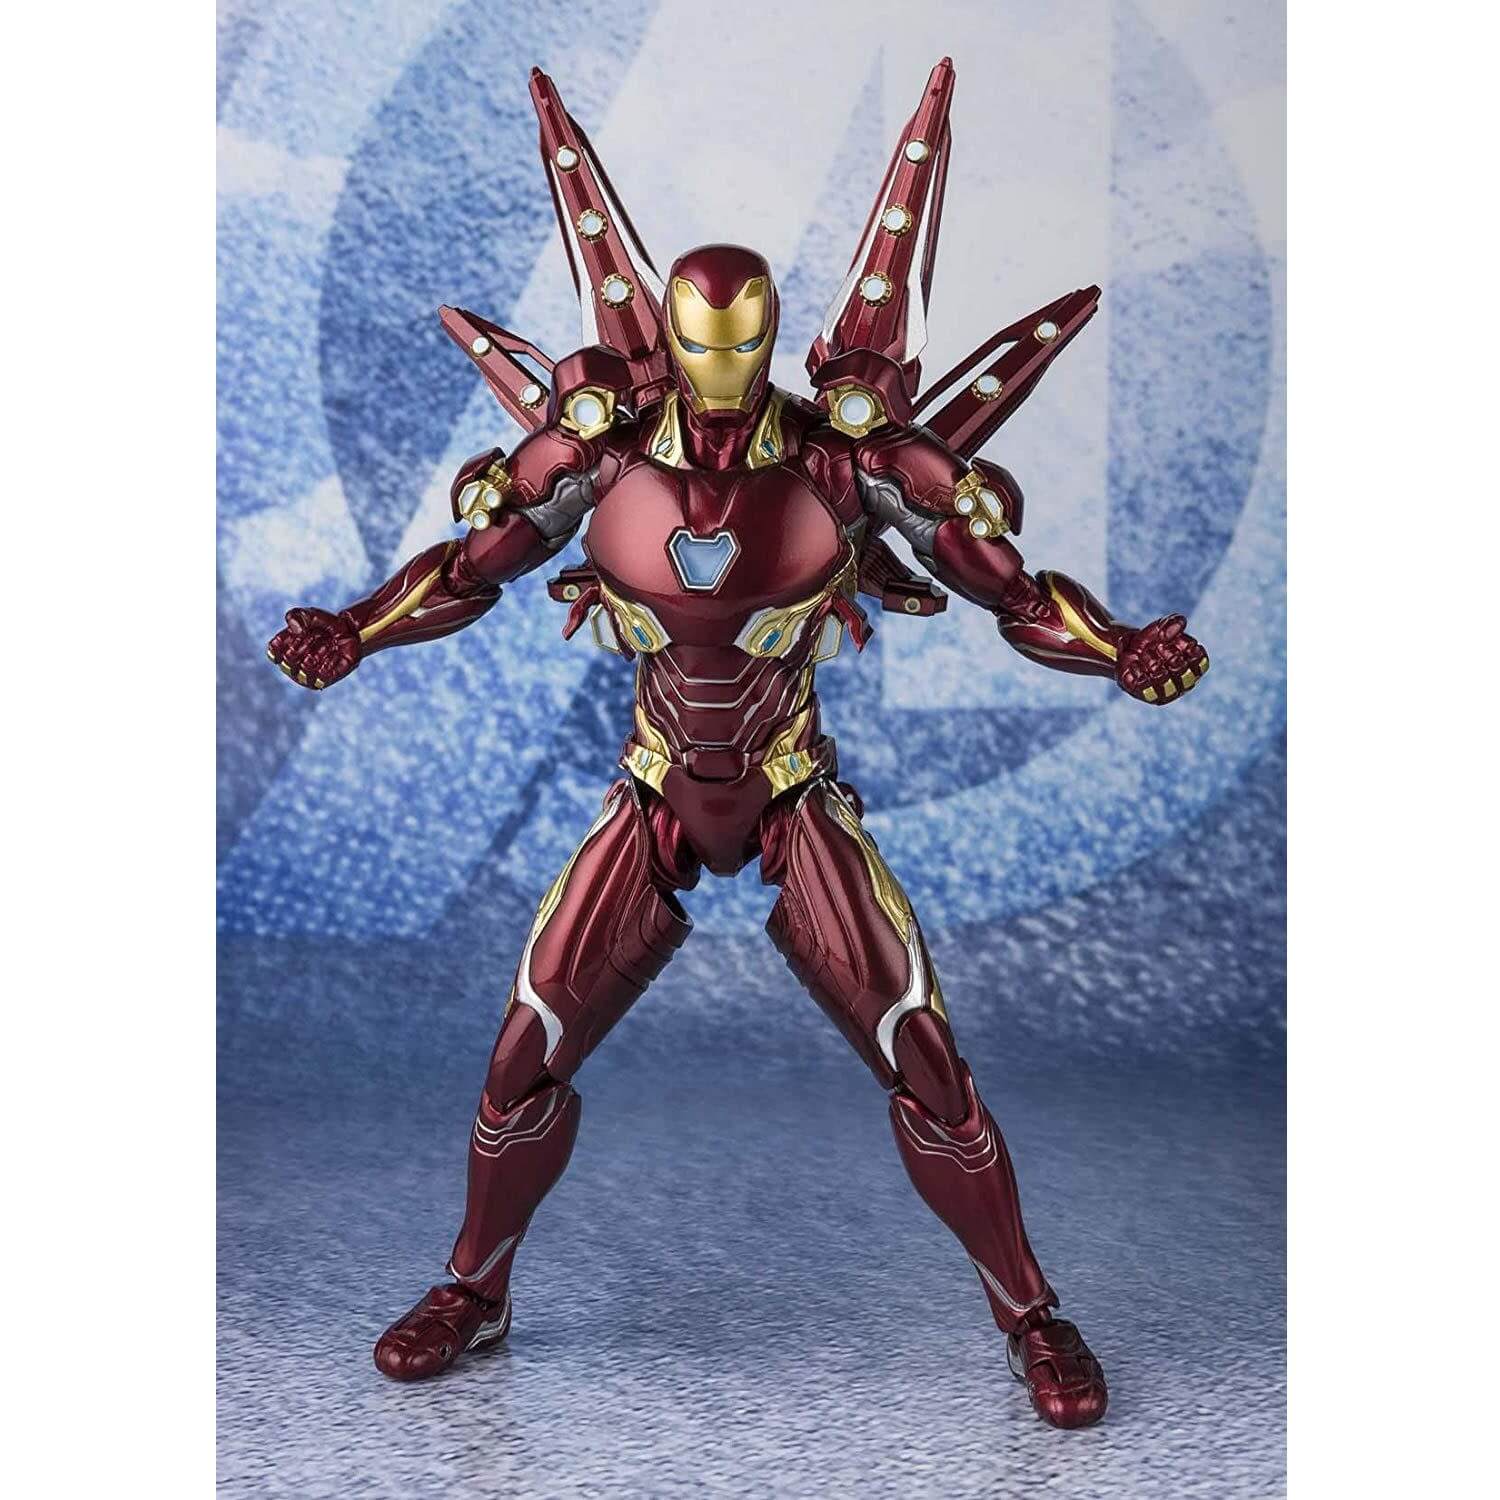 https://www.foxchip-collector.com/127095/figurine-marvel-avengers-iron-man-mk-50-weapon-set-sh-figuarts-18cmmarvel.jpg